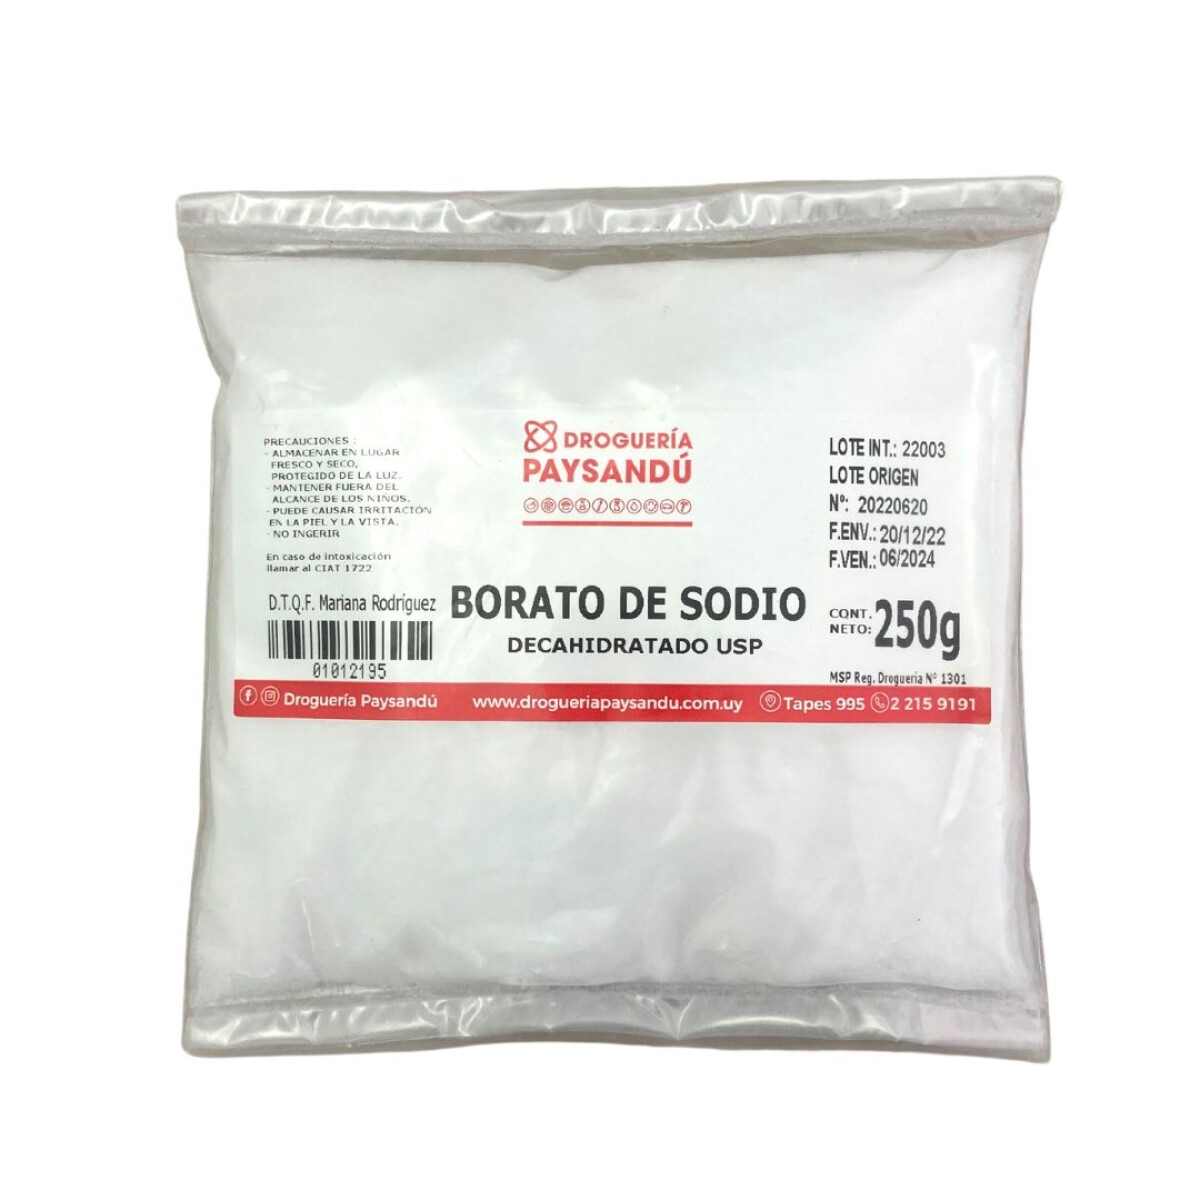 Borato de sodio decahidratado con USP - 250 g 